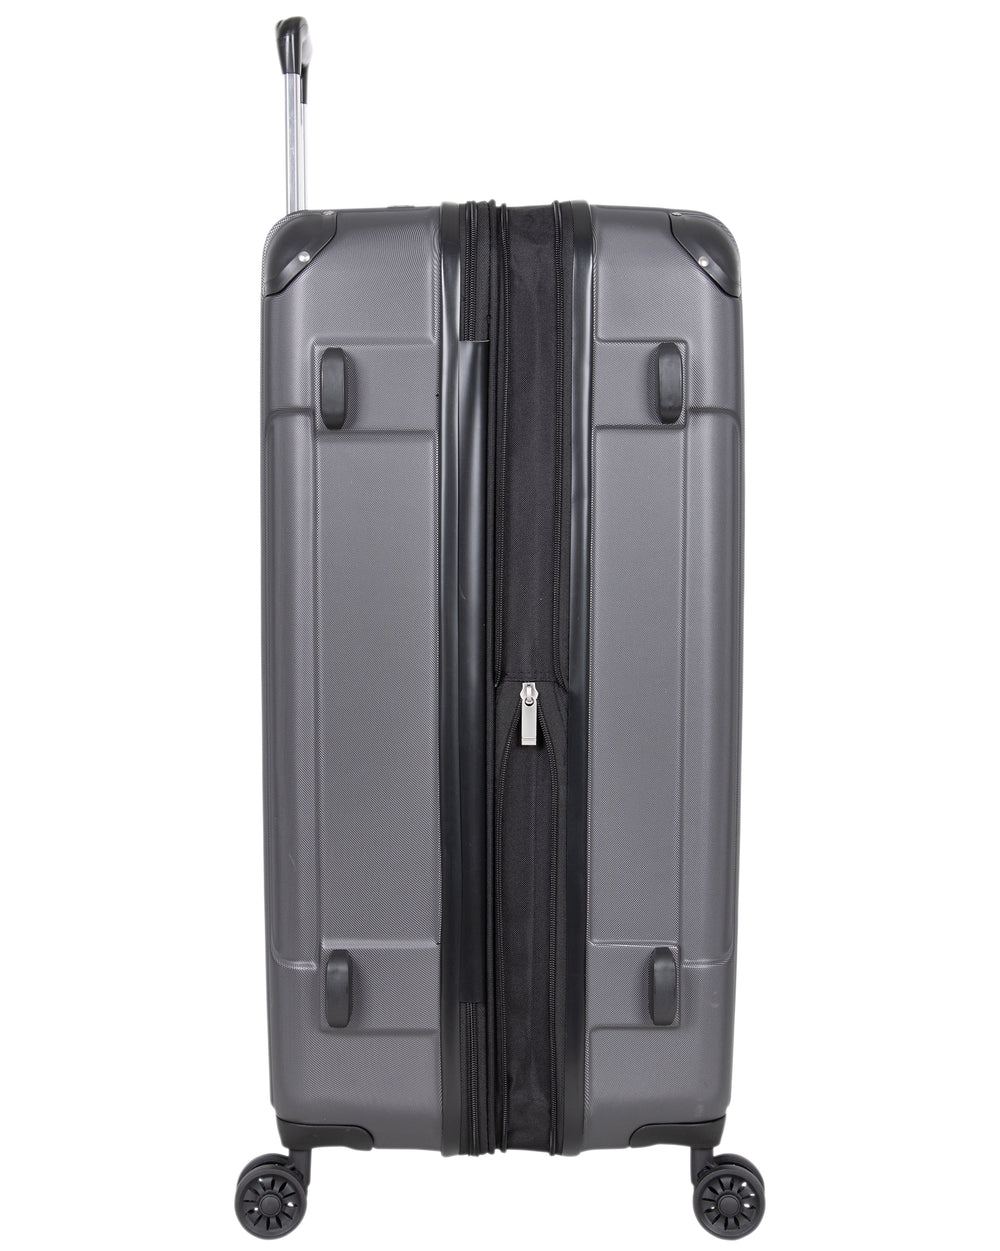 Heathrow Haul 3-Piece Lightweight Expandable Luggage Set - Charcoal